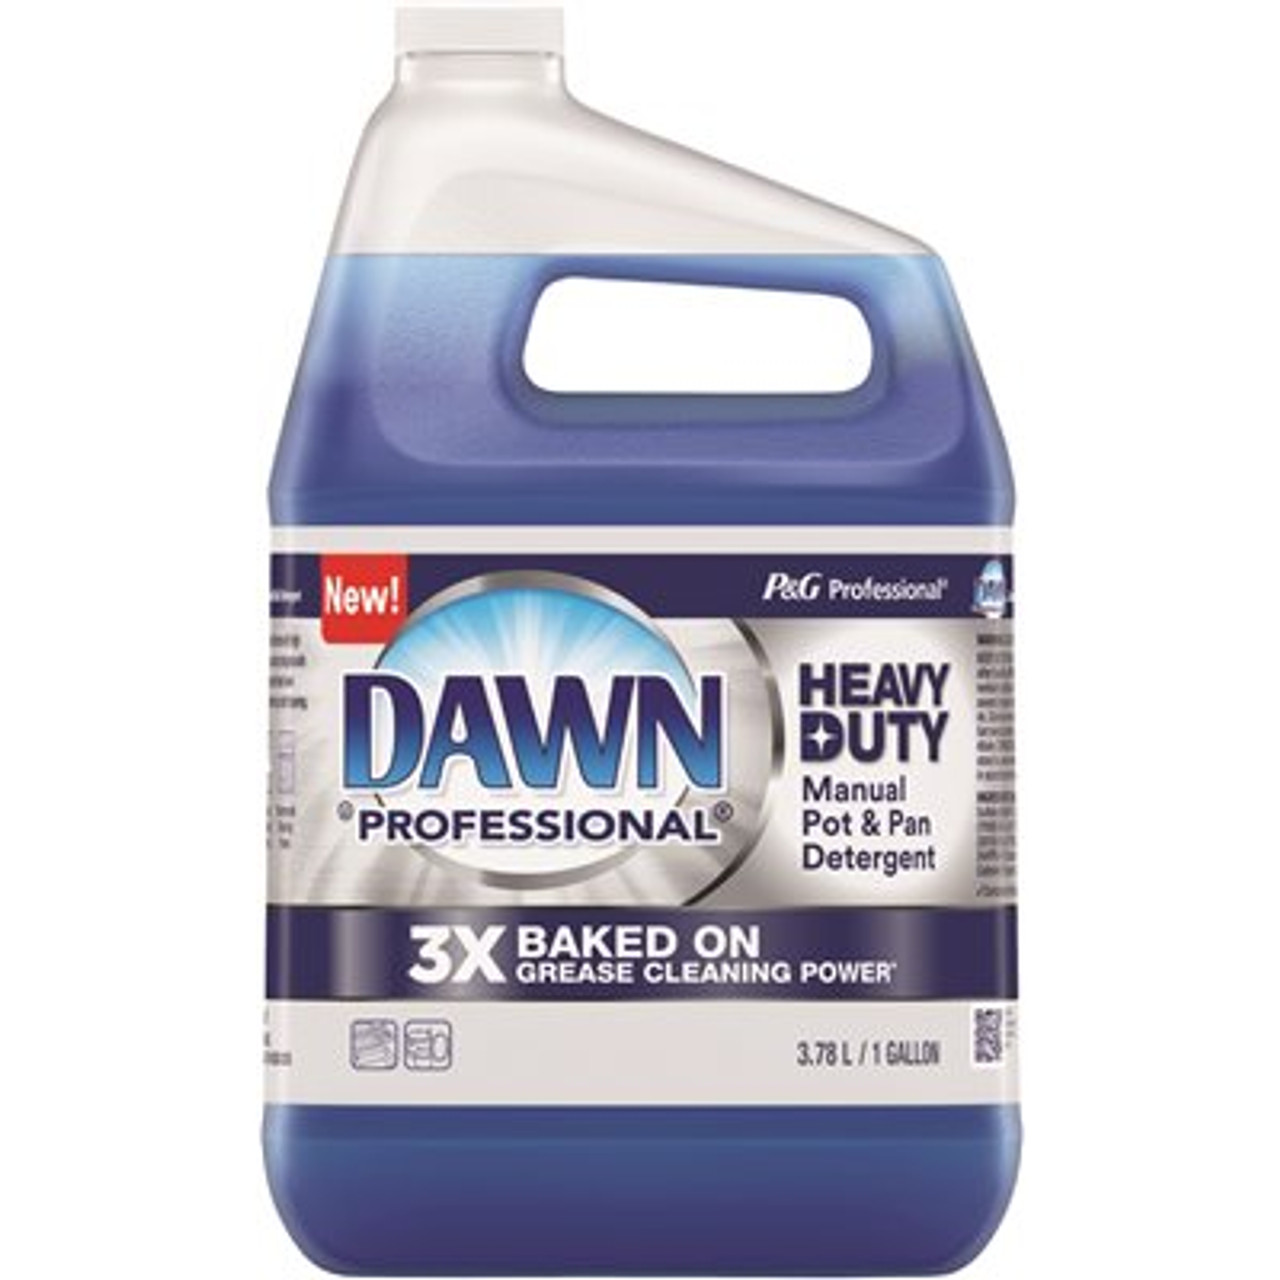 Dawn Professional Heavy Duty 1 Gal. Original Scent Manual Pot and Pan Dish Soap Detergent